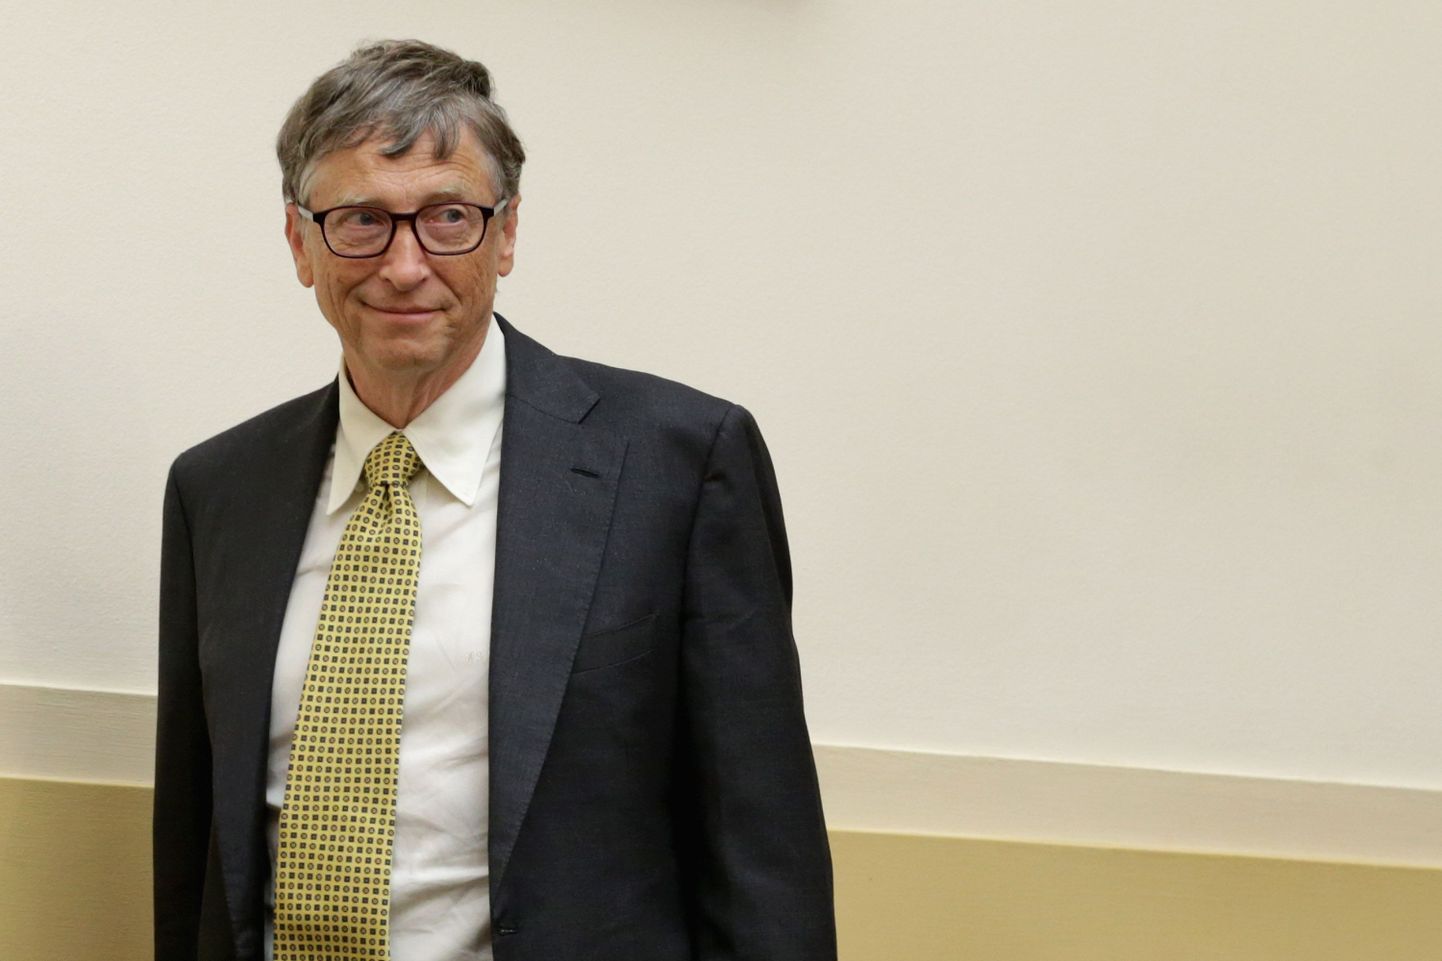 Microsofti asutaja Bill Gates.